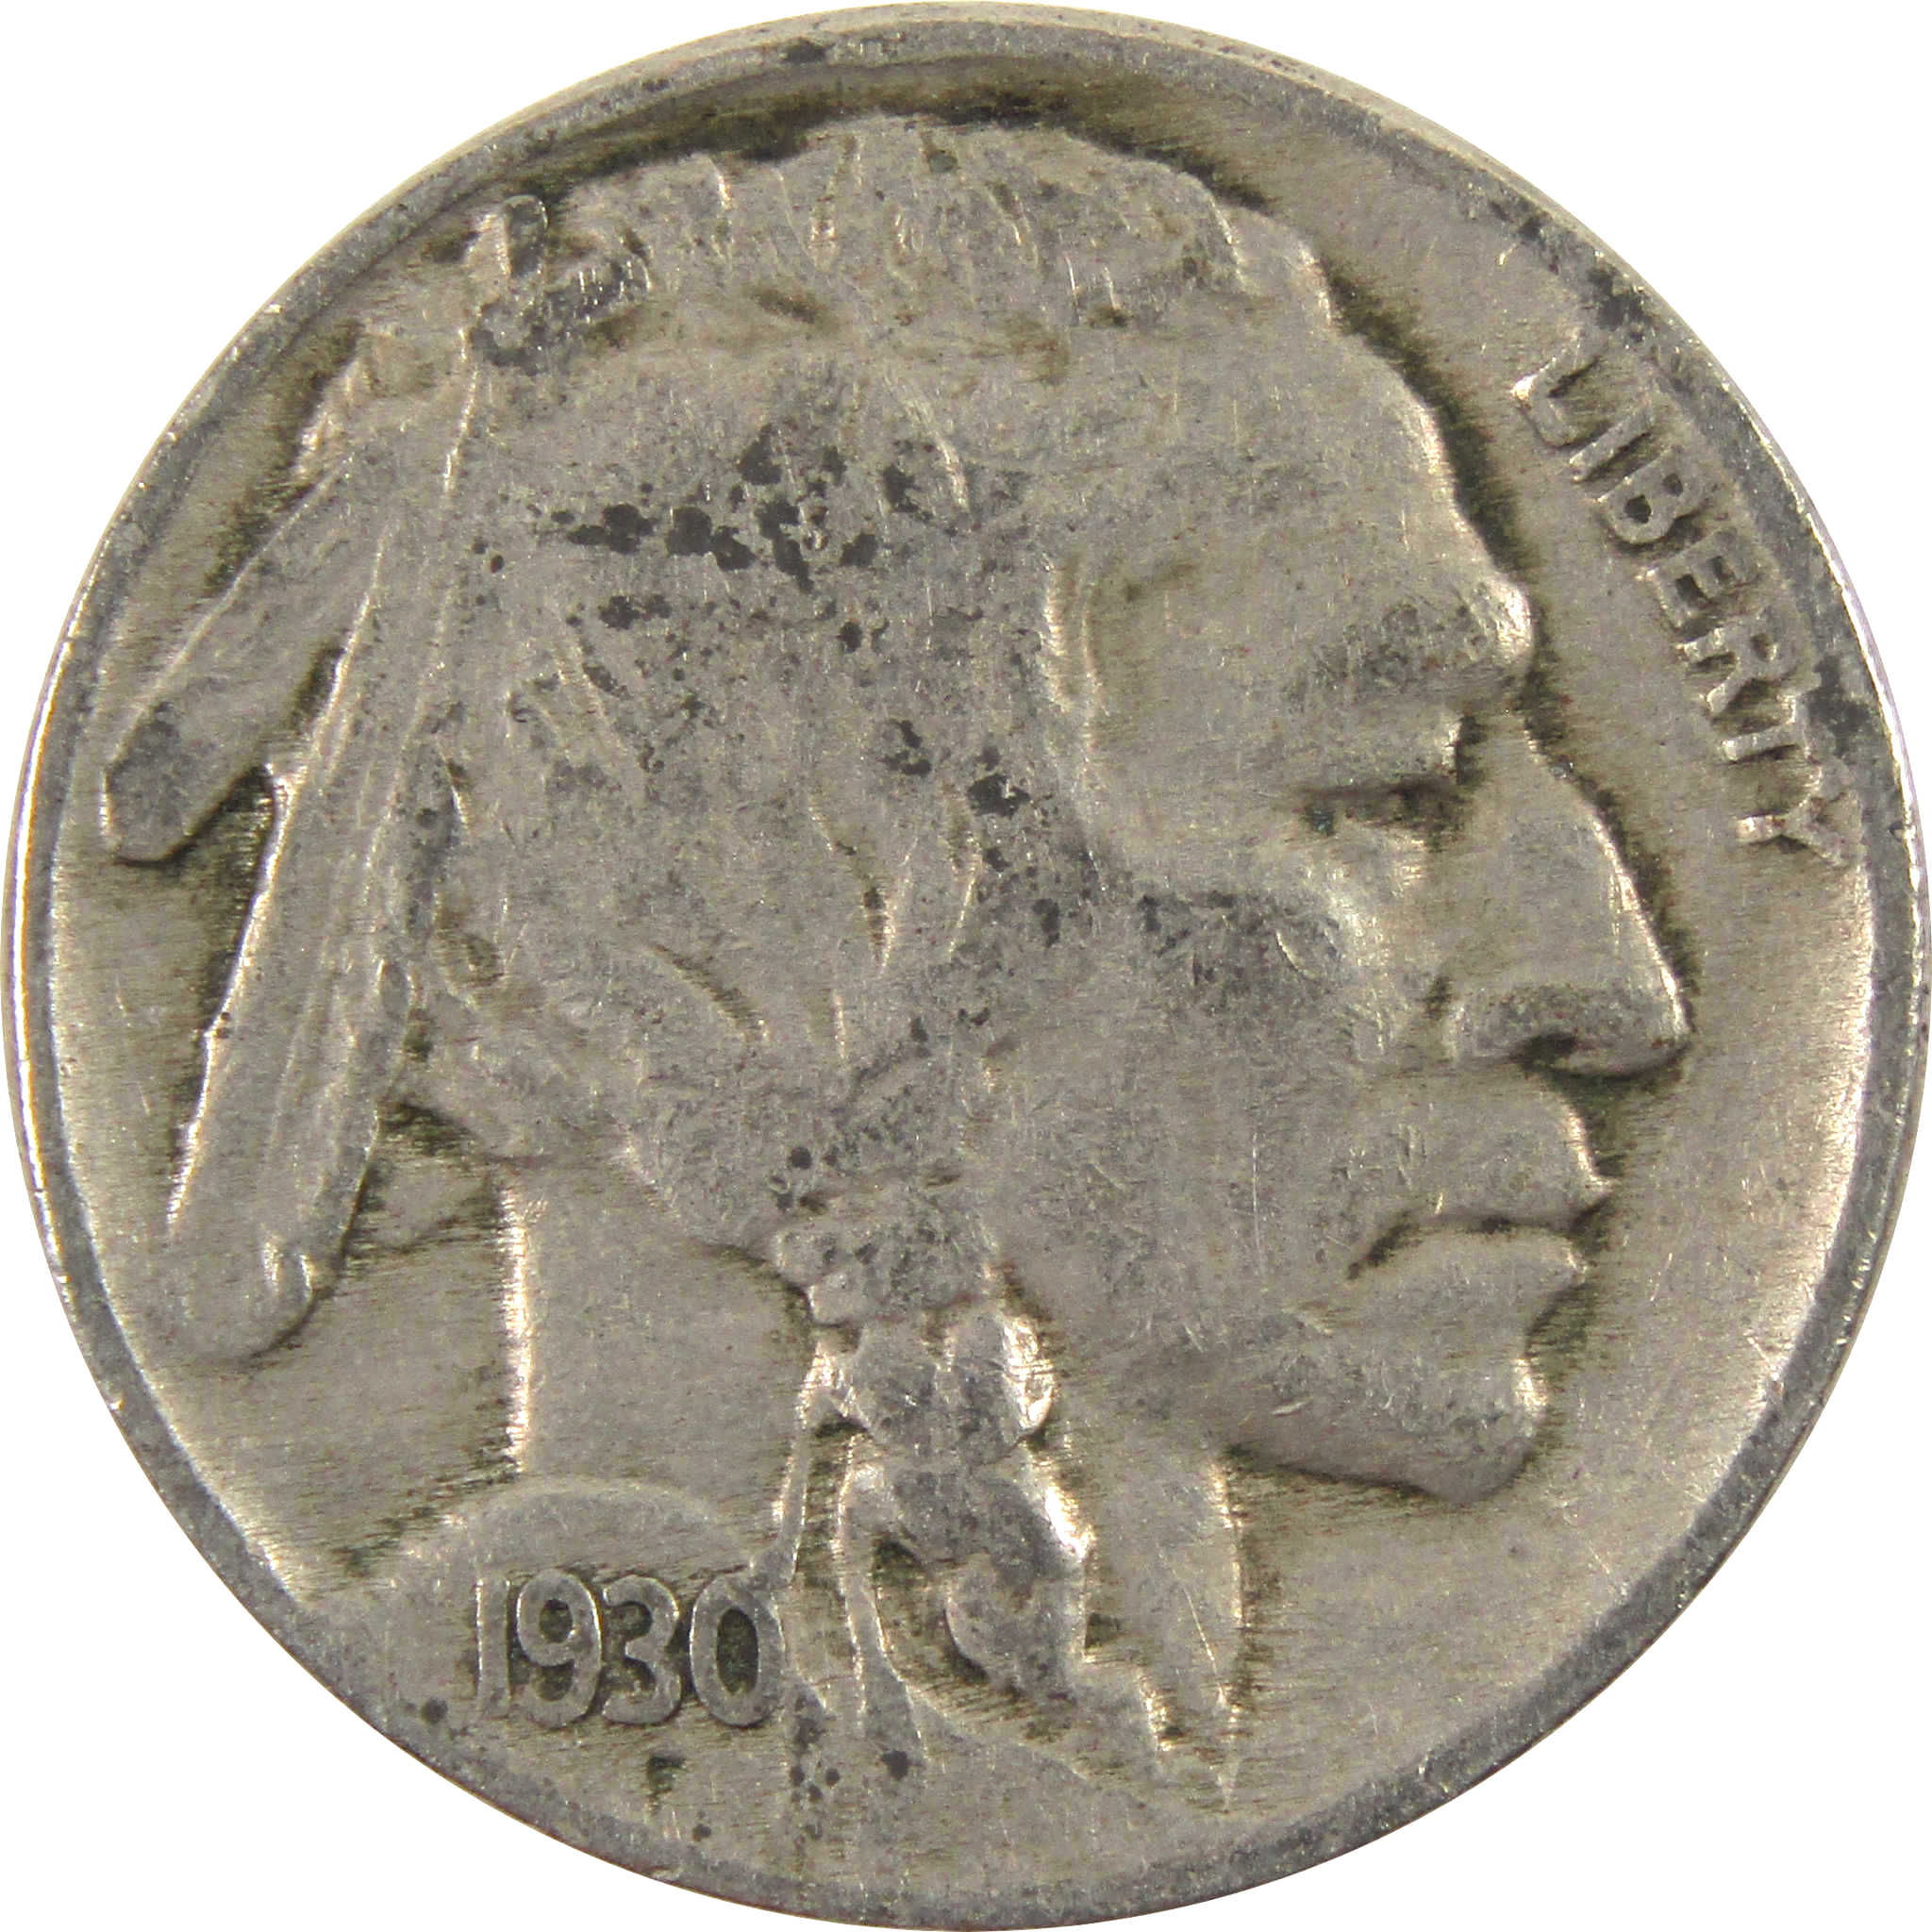 1930 Indian Head Buffalo Nickel AG About Good 5c Coin